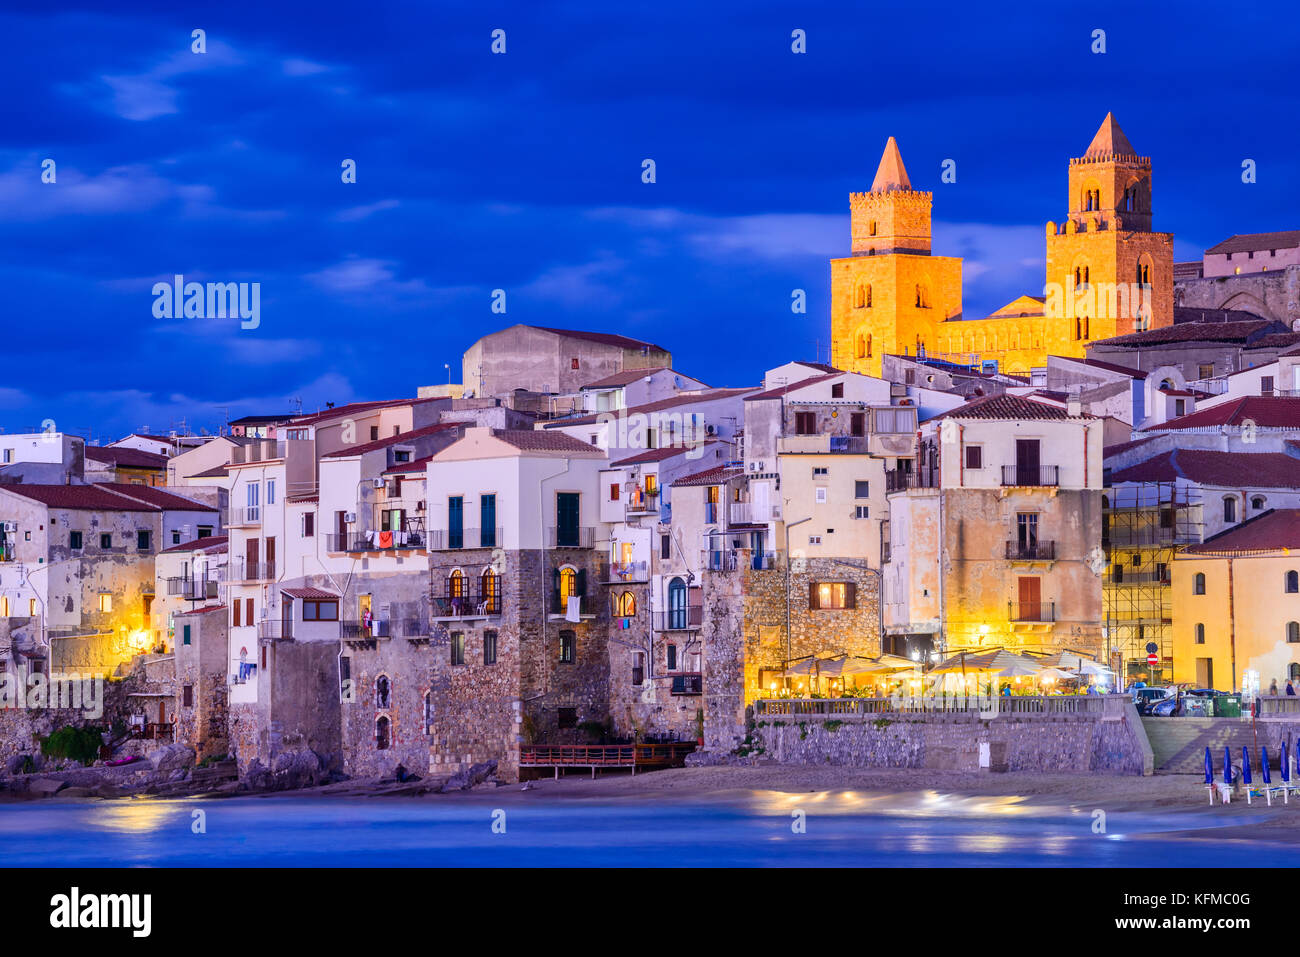 Cefalu, Sicily. Ligurian Sea and medieval sicilian city Cefalu. Province of Palermo, Italy. Stock Photo